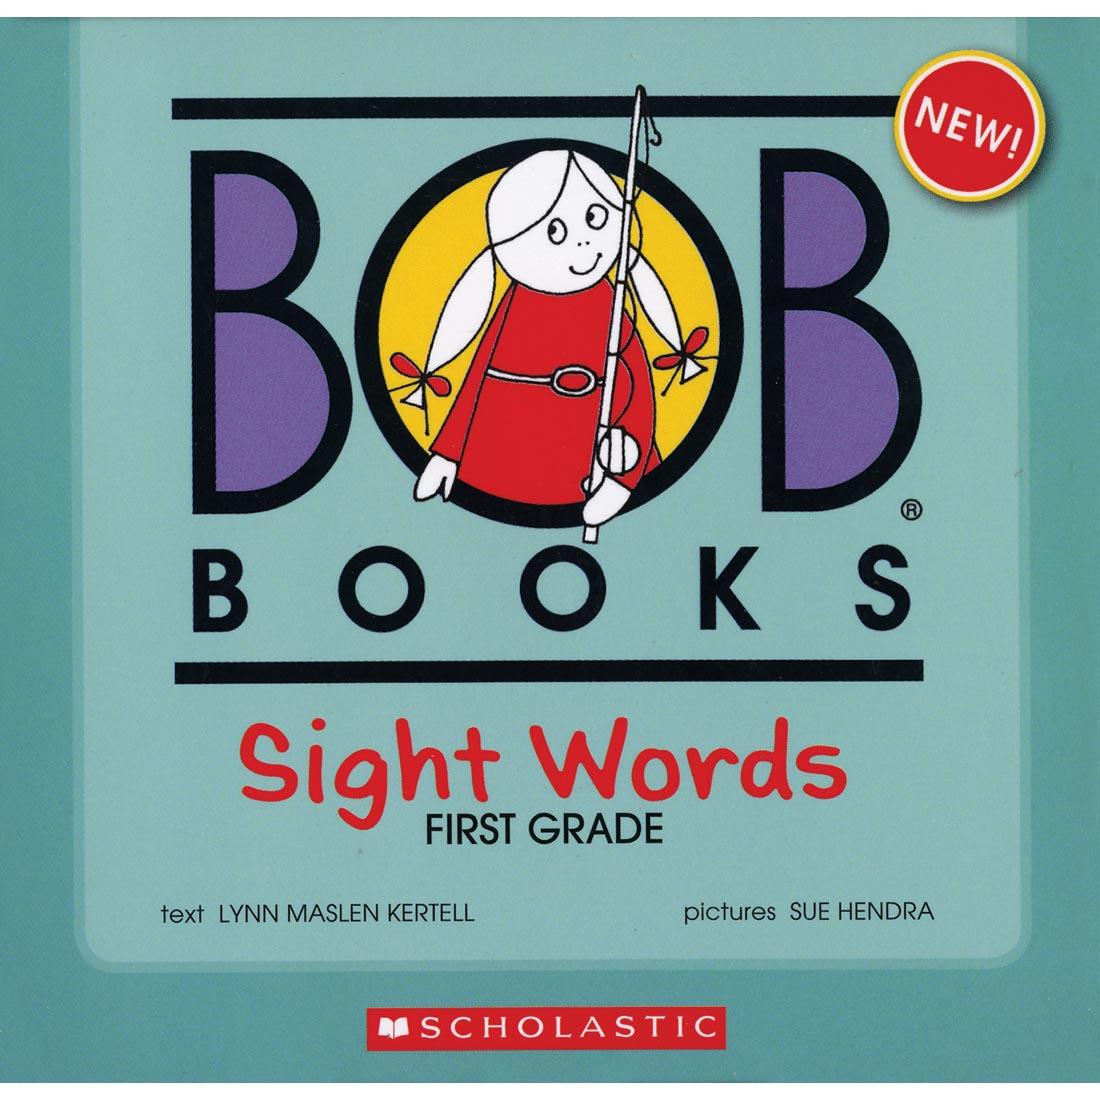 BOB Books Sight Words by Scholastic Grade 1